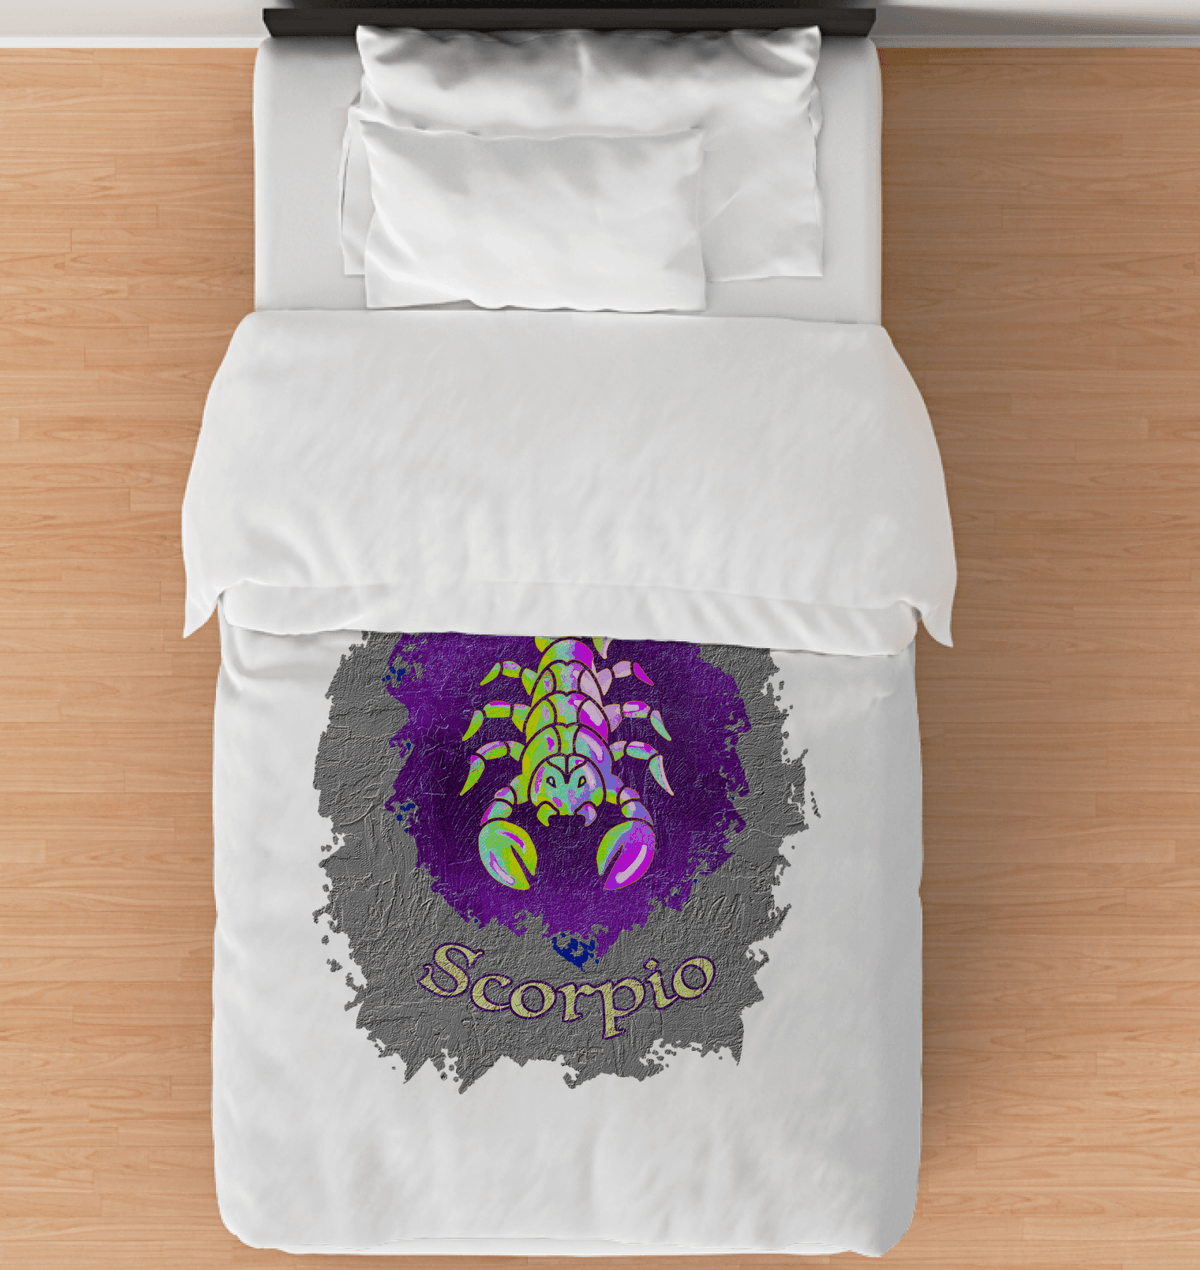 Scorpio Comforter Twin | Zodiac Series 11 - Beyond T-shirts